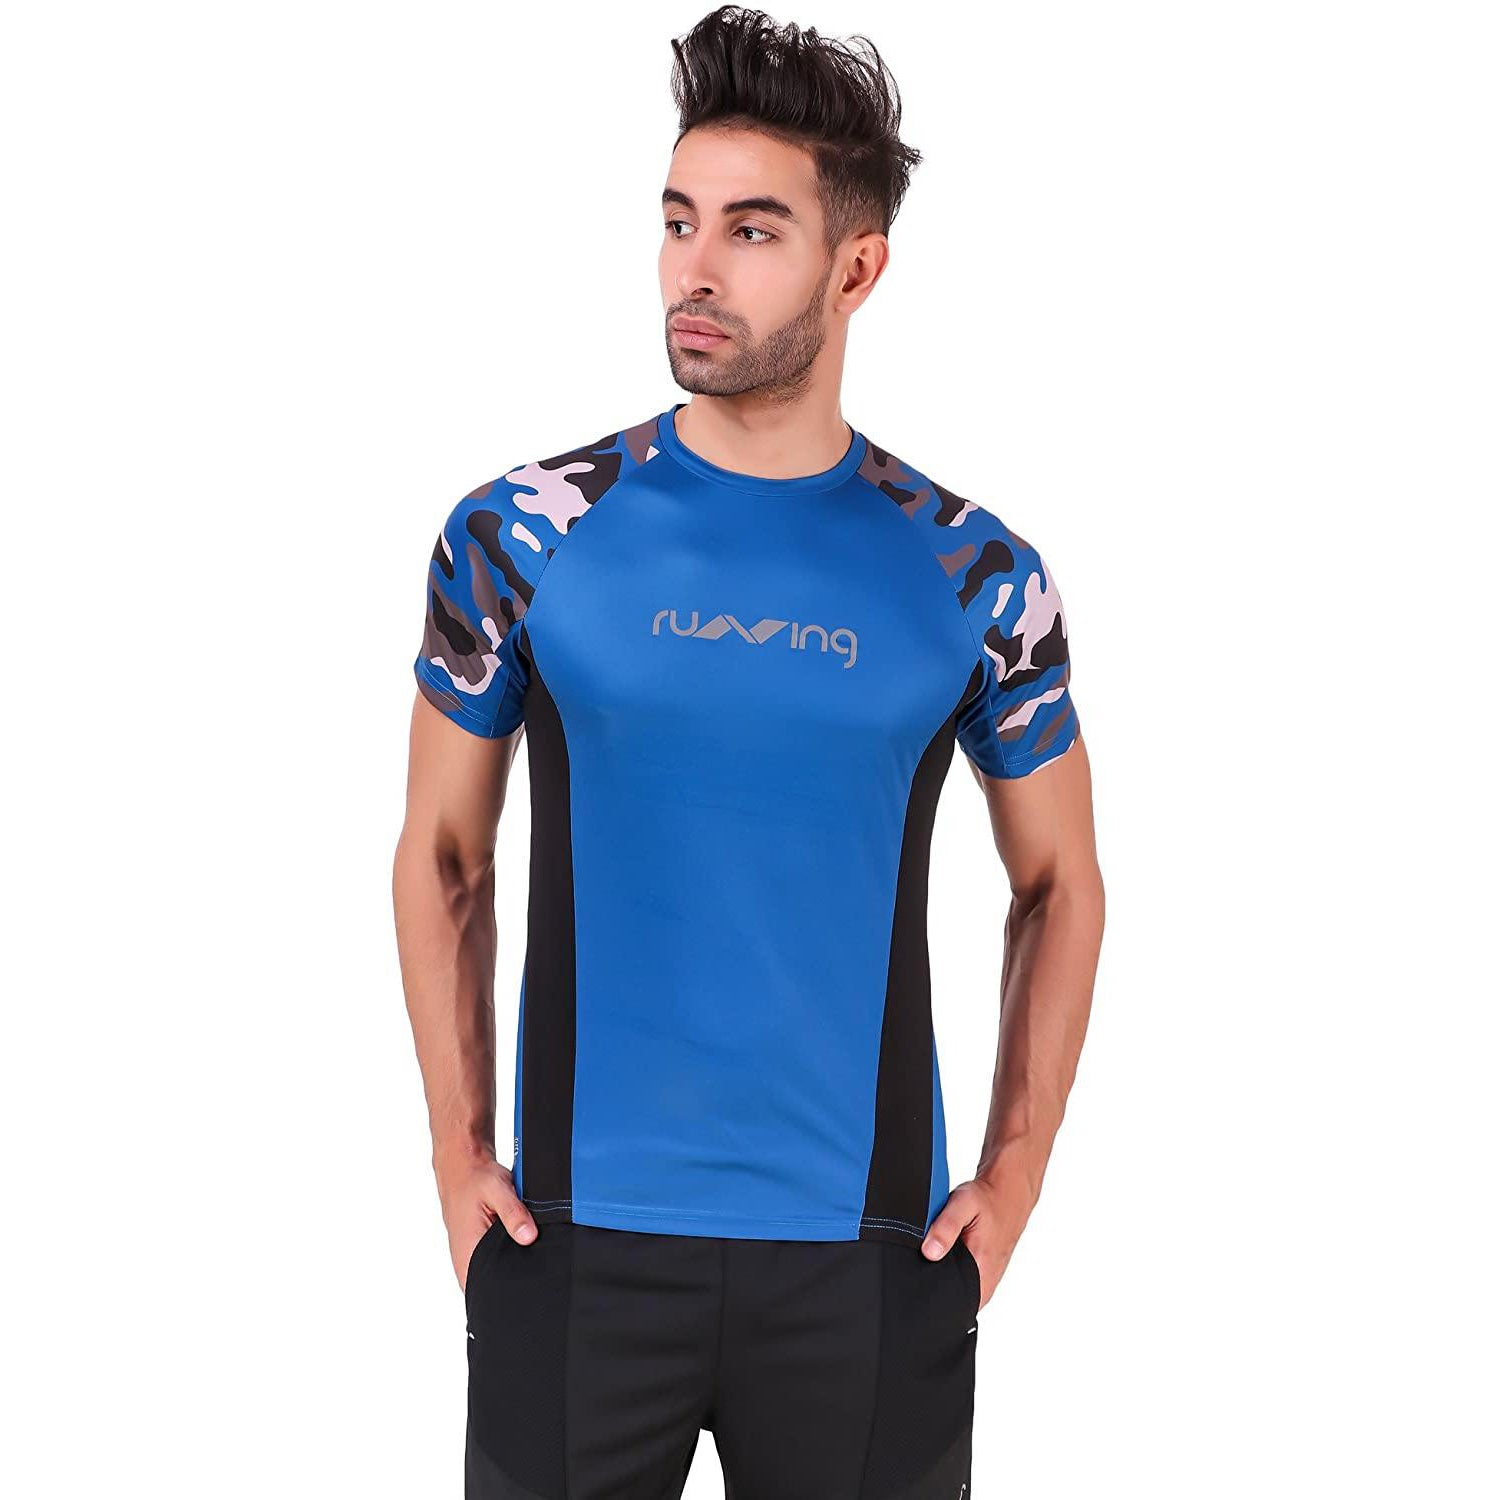 Nivia Camo1 Sublimated Round Neck Sports T-shirt, Marine Blue - Best Price online Prokicksports.com